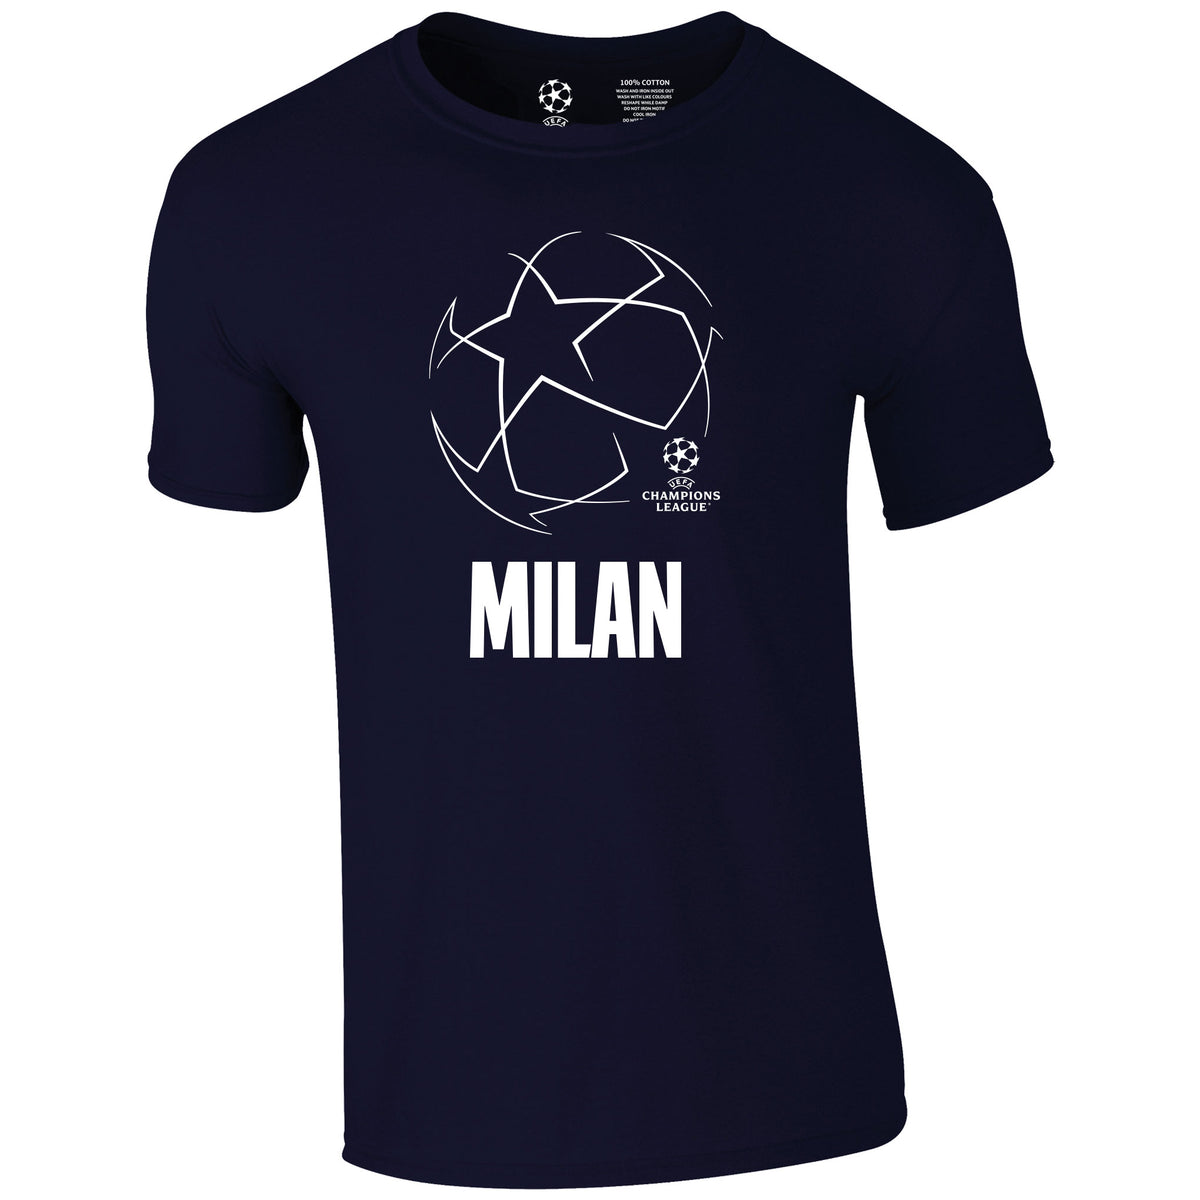 Champions League Starball Milan City T-Shirt Navy